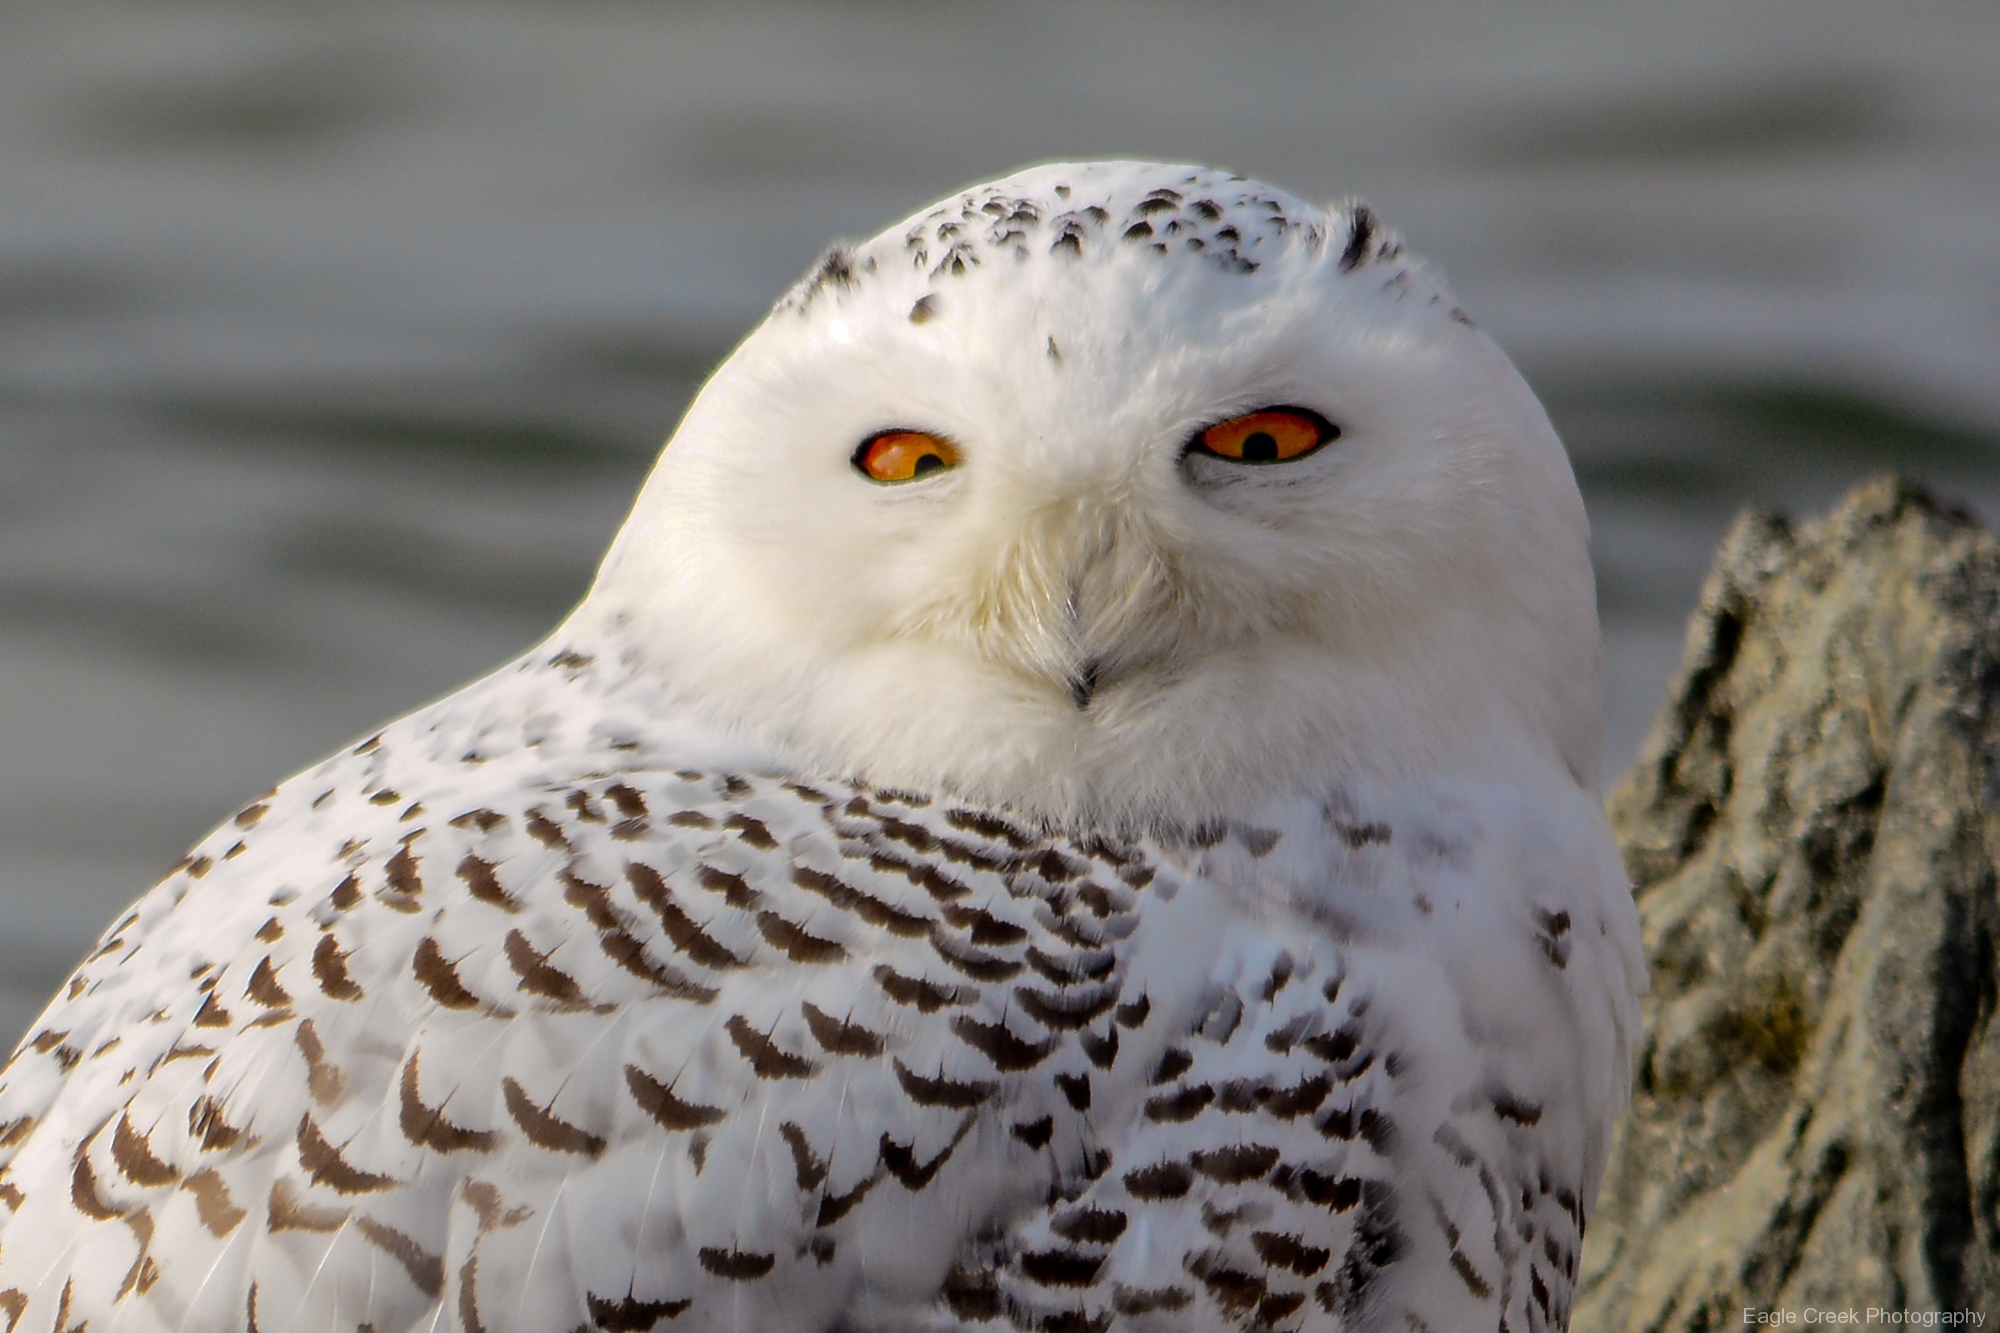 Owls – Eagle Creek Photography